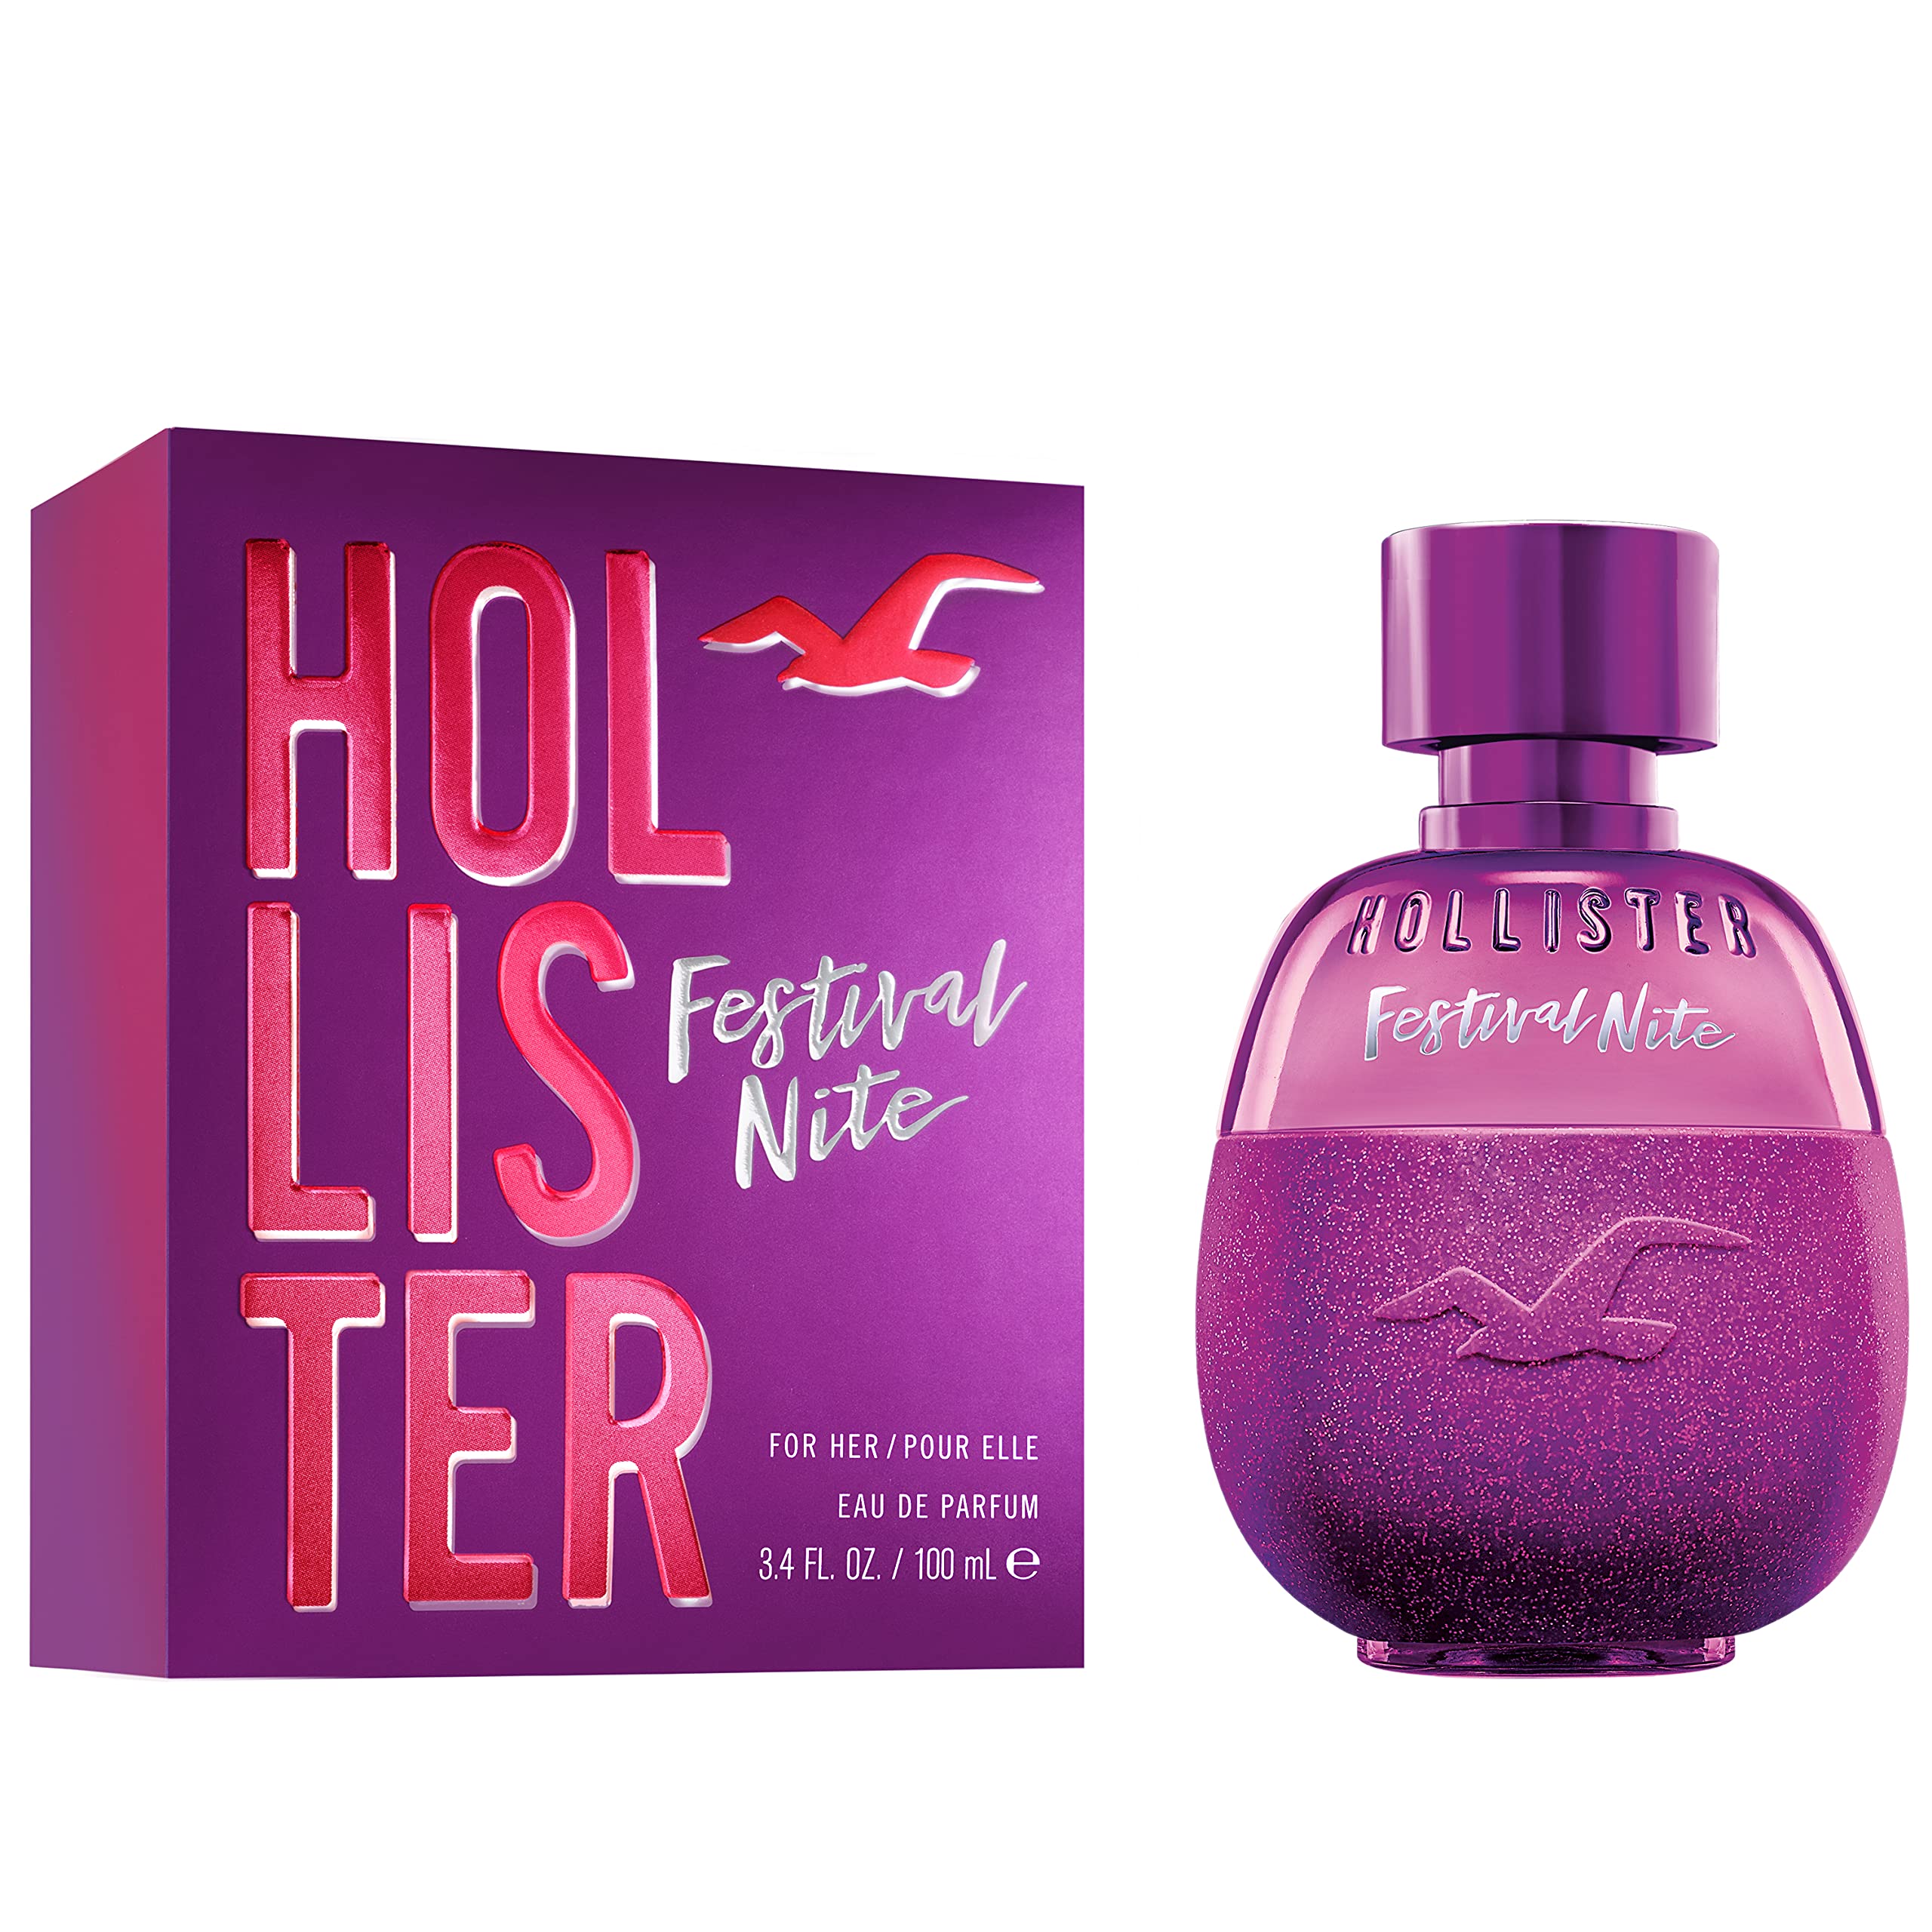 Mua Hollister Festival Nite For Her Eau de Parfum trên Amazon Anh chính  hãng 2023 | Fado